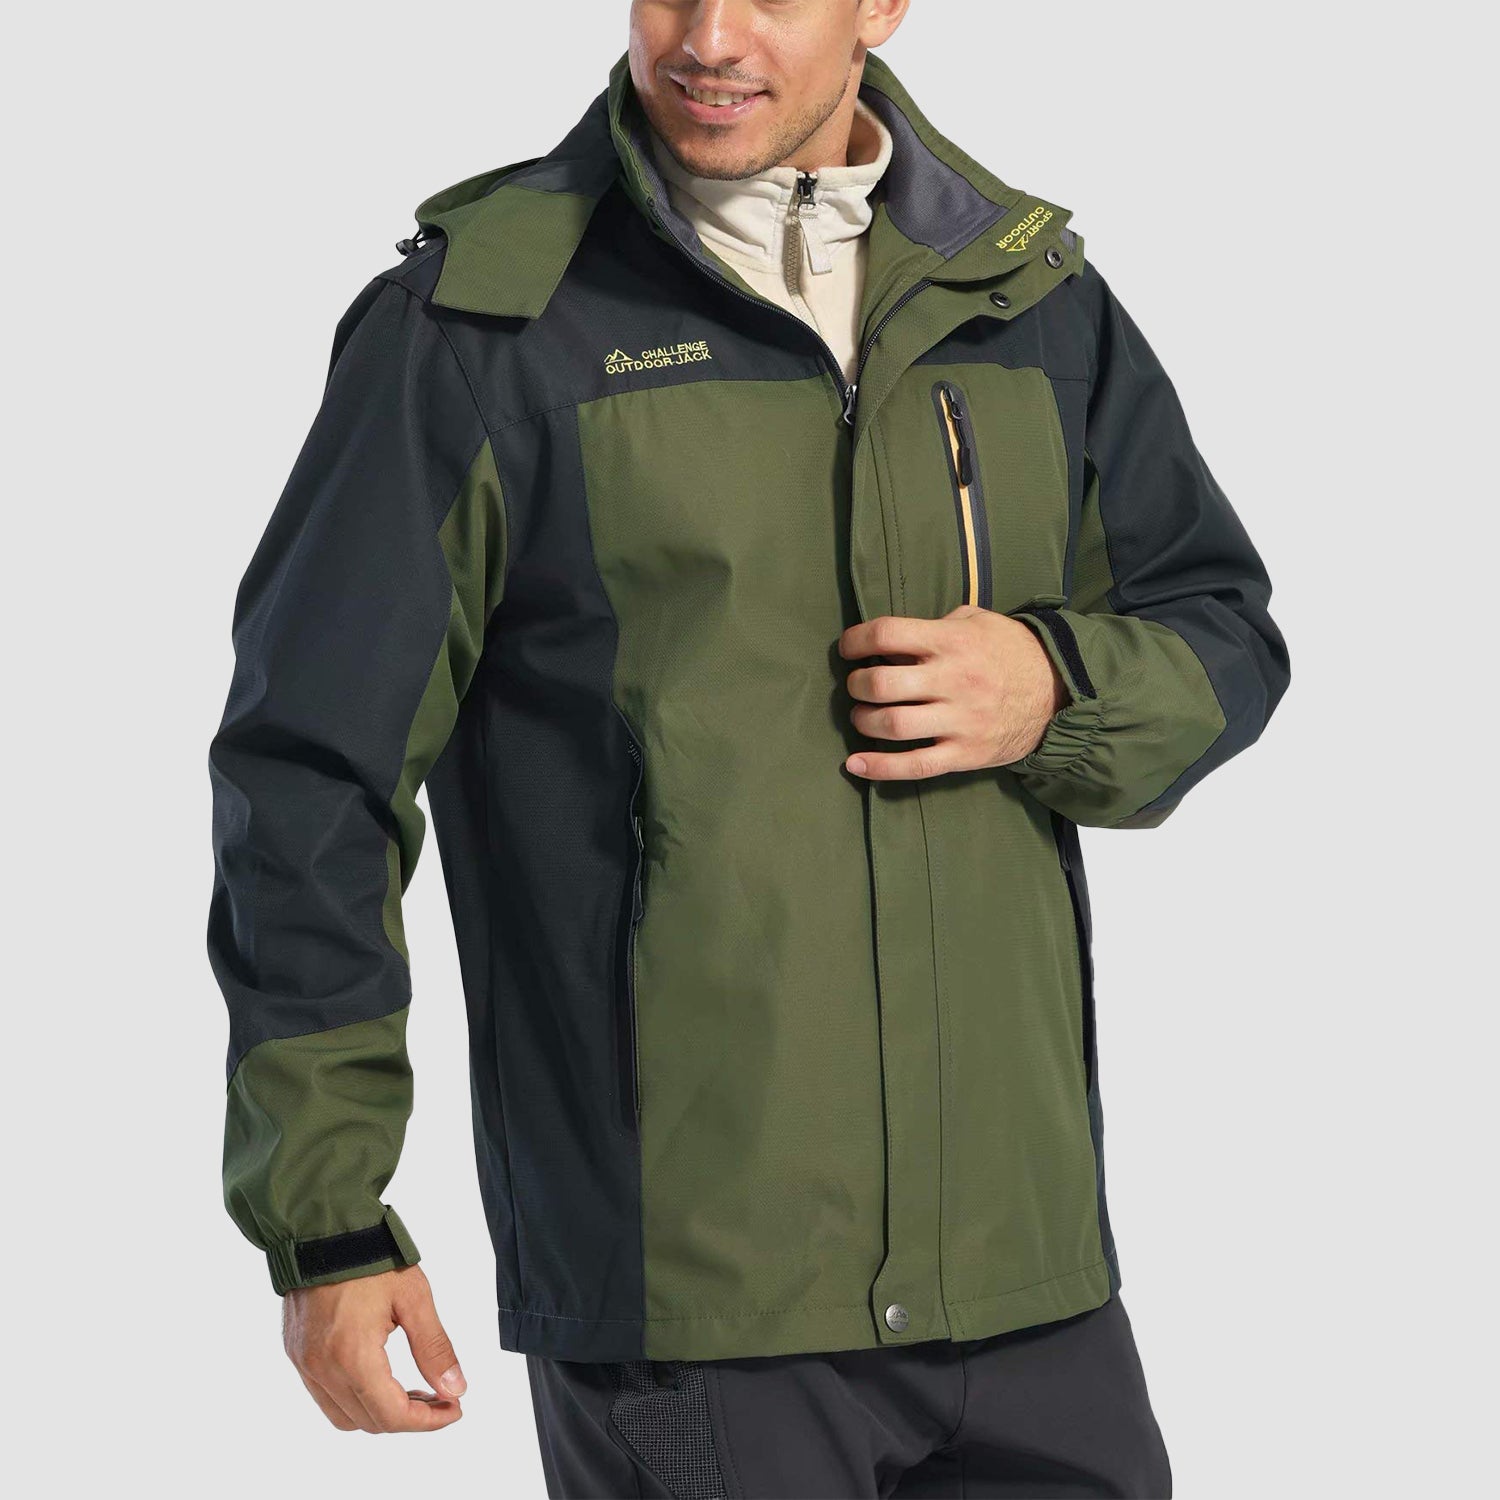 MAGCOMSEN Men's Hooded Windproof Water Resistant Rain Jacket Windbreaker 5 Pockets for Hiking Fishing